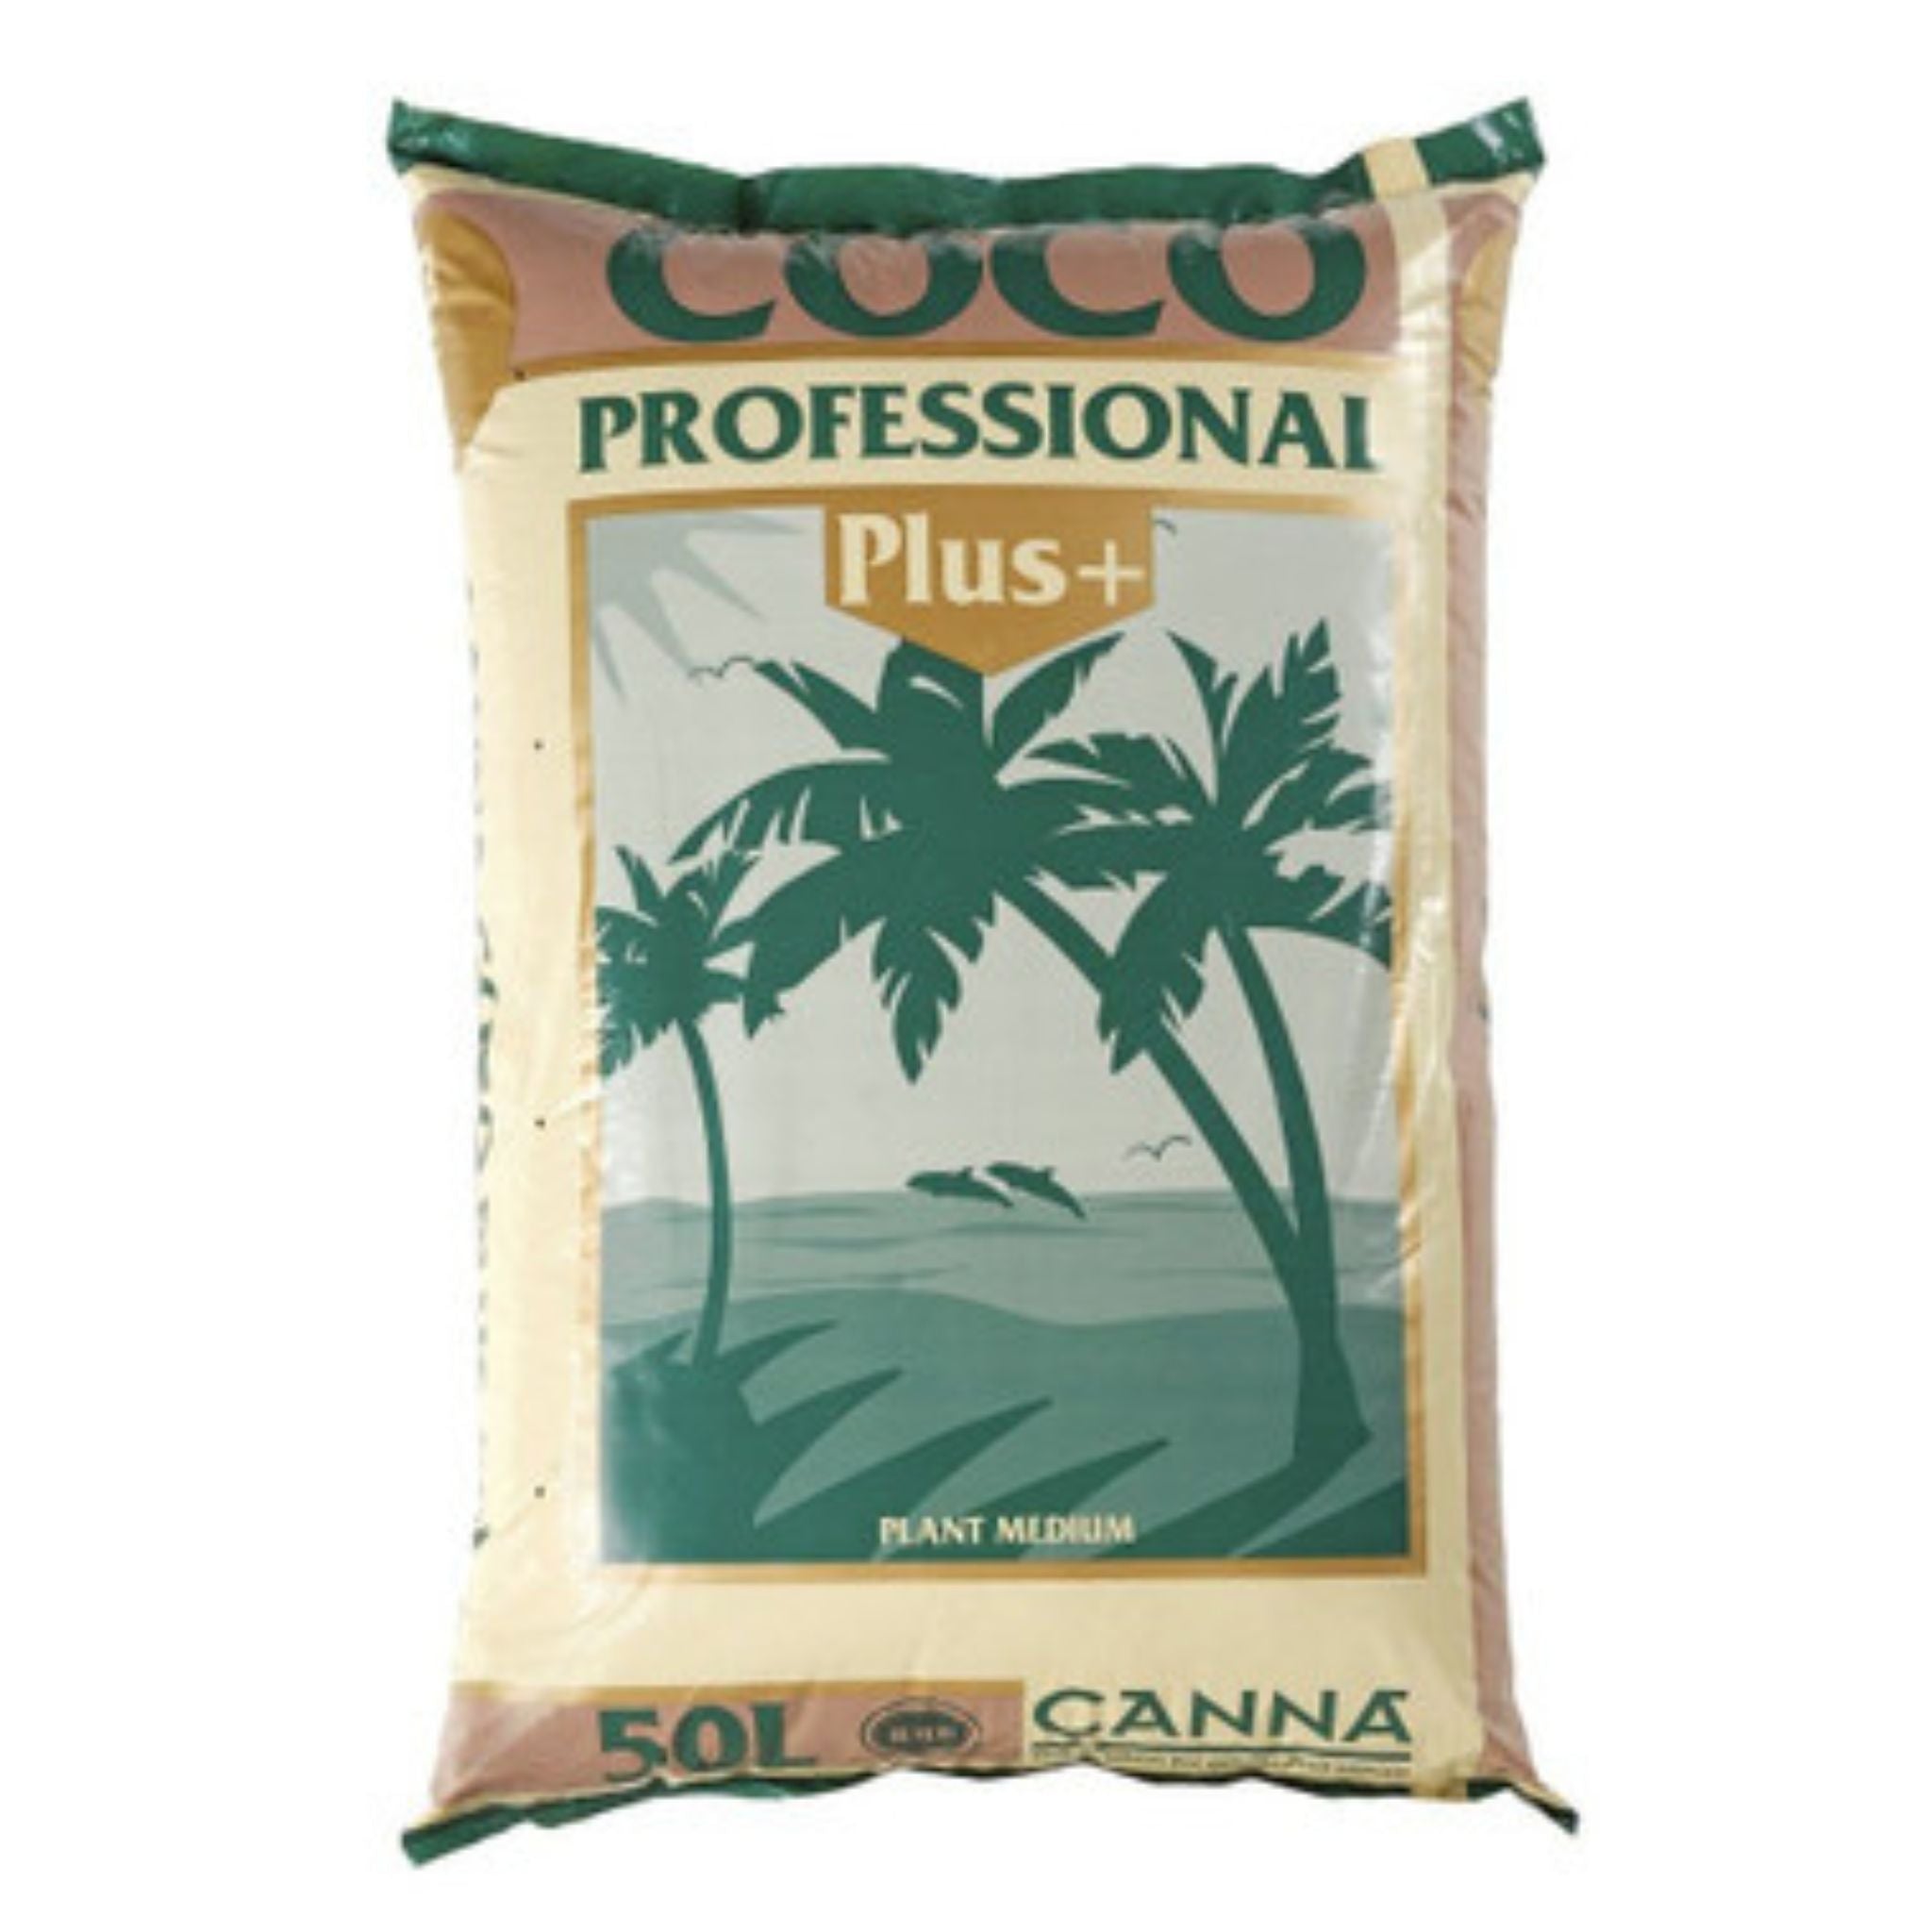 Canna Coco Professional Plus 25L Or 50L